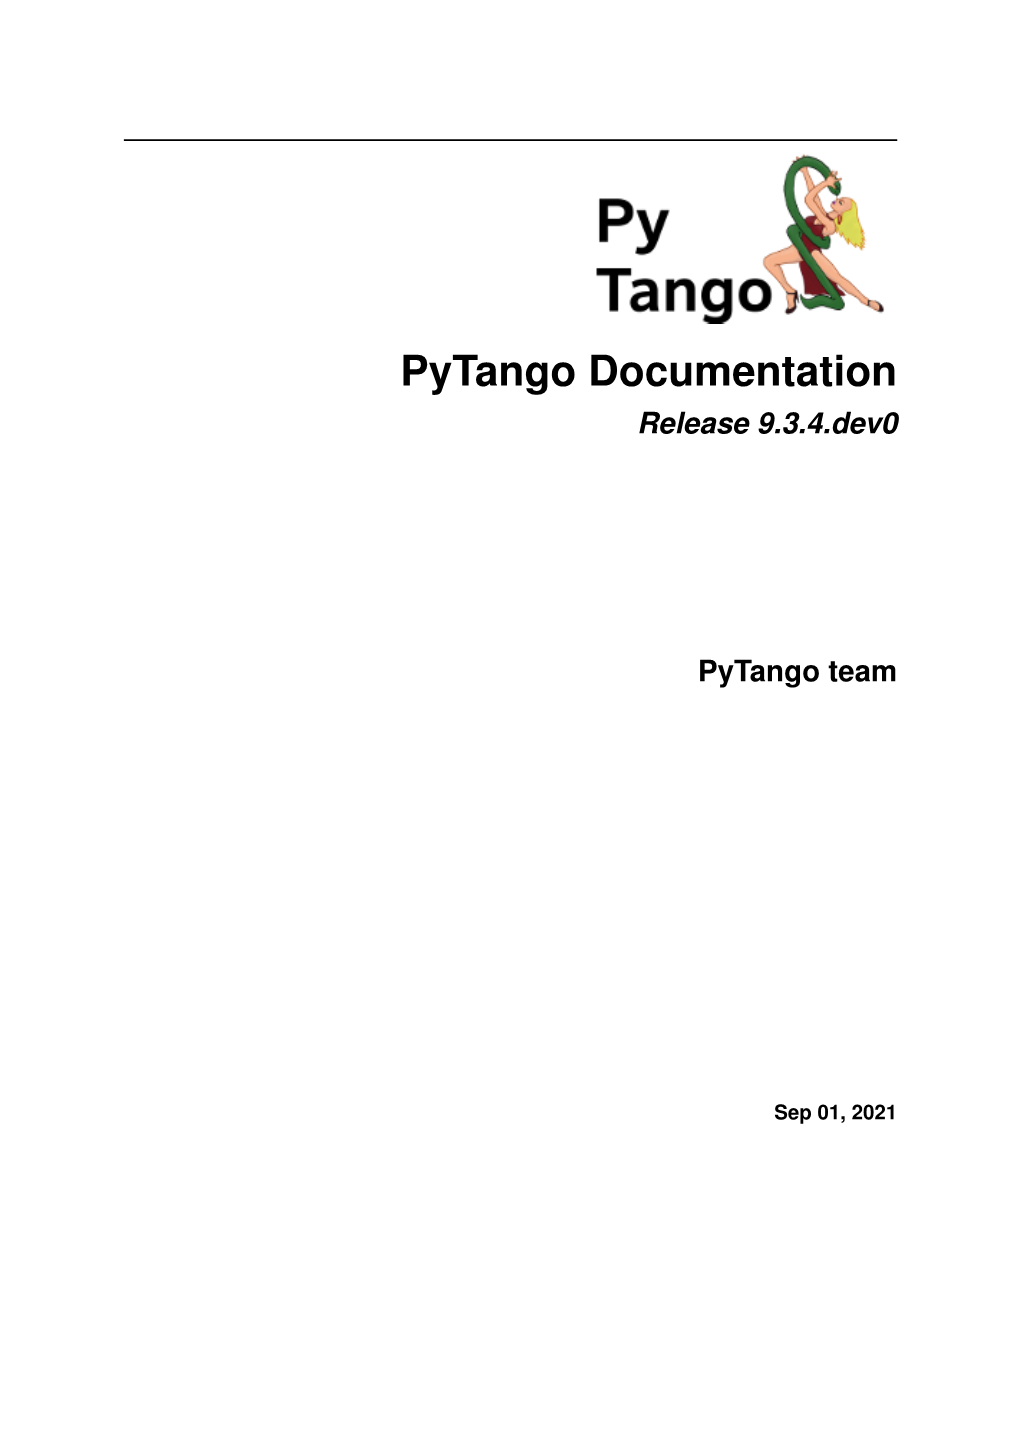 Pytango Documentation Release 9.3.4.Dev0